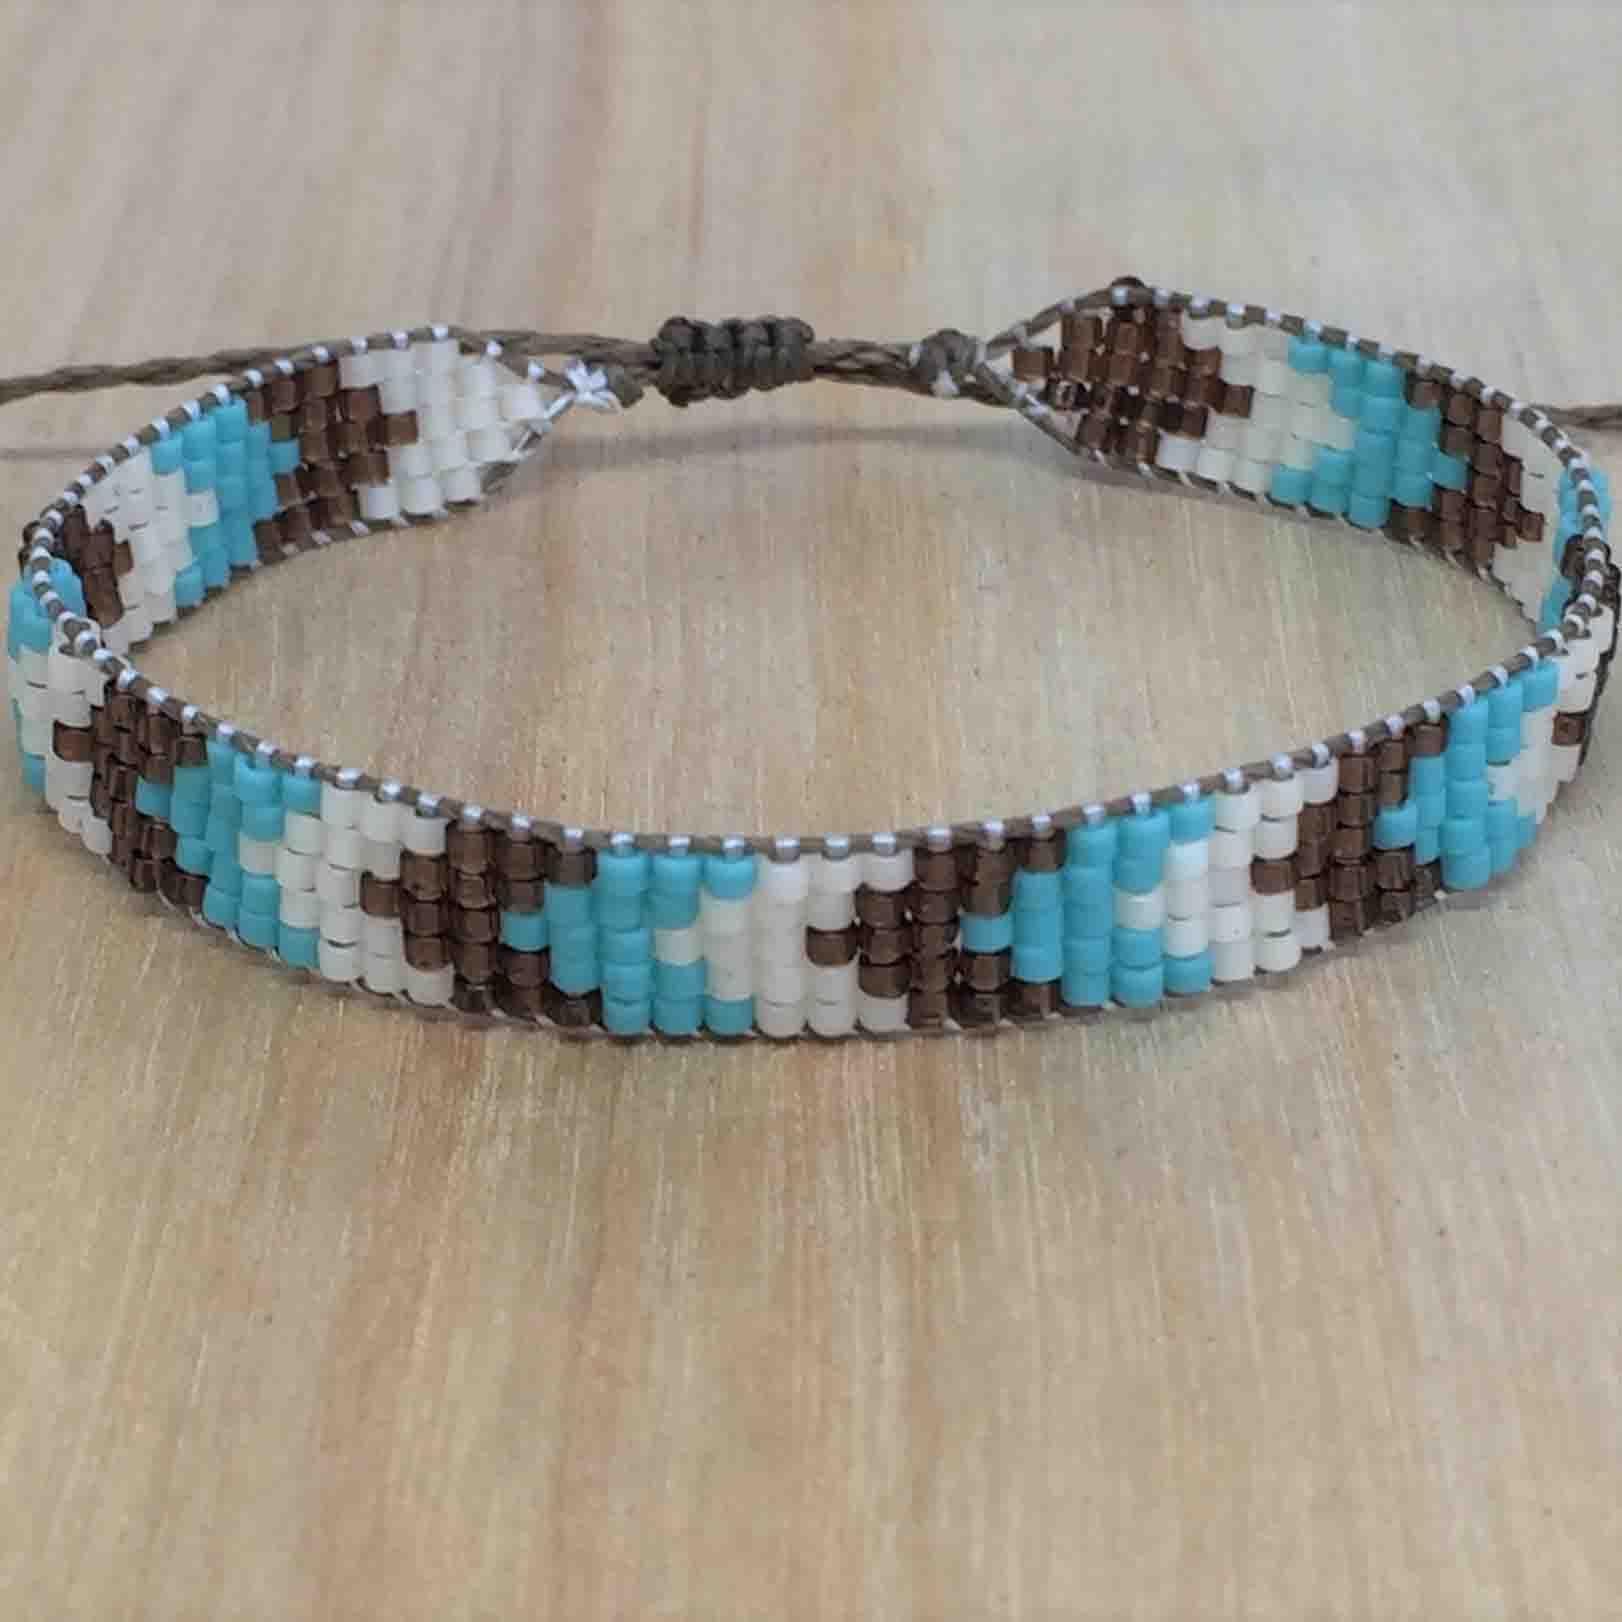 Free Bead Loom Patterns & Bracelet Ideas - Cutesy Crafts